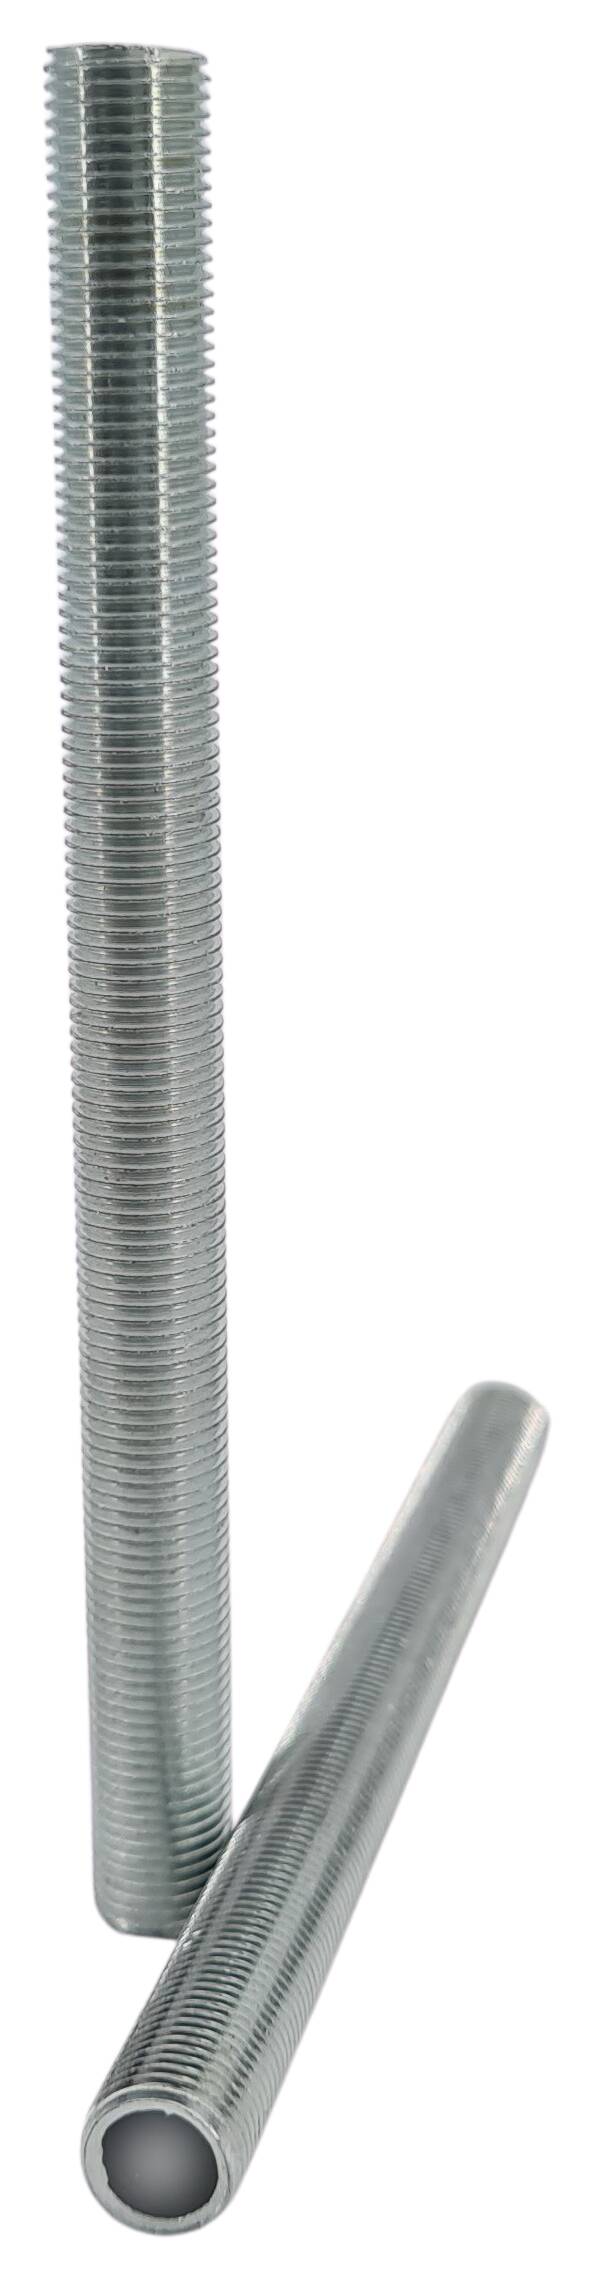 iron thread tube M10x1x130 round zinc